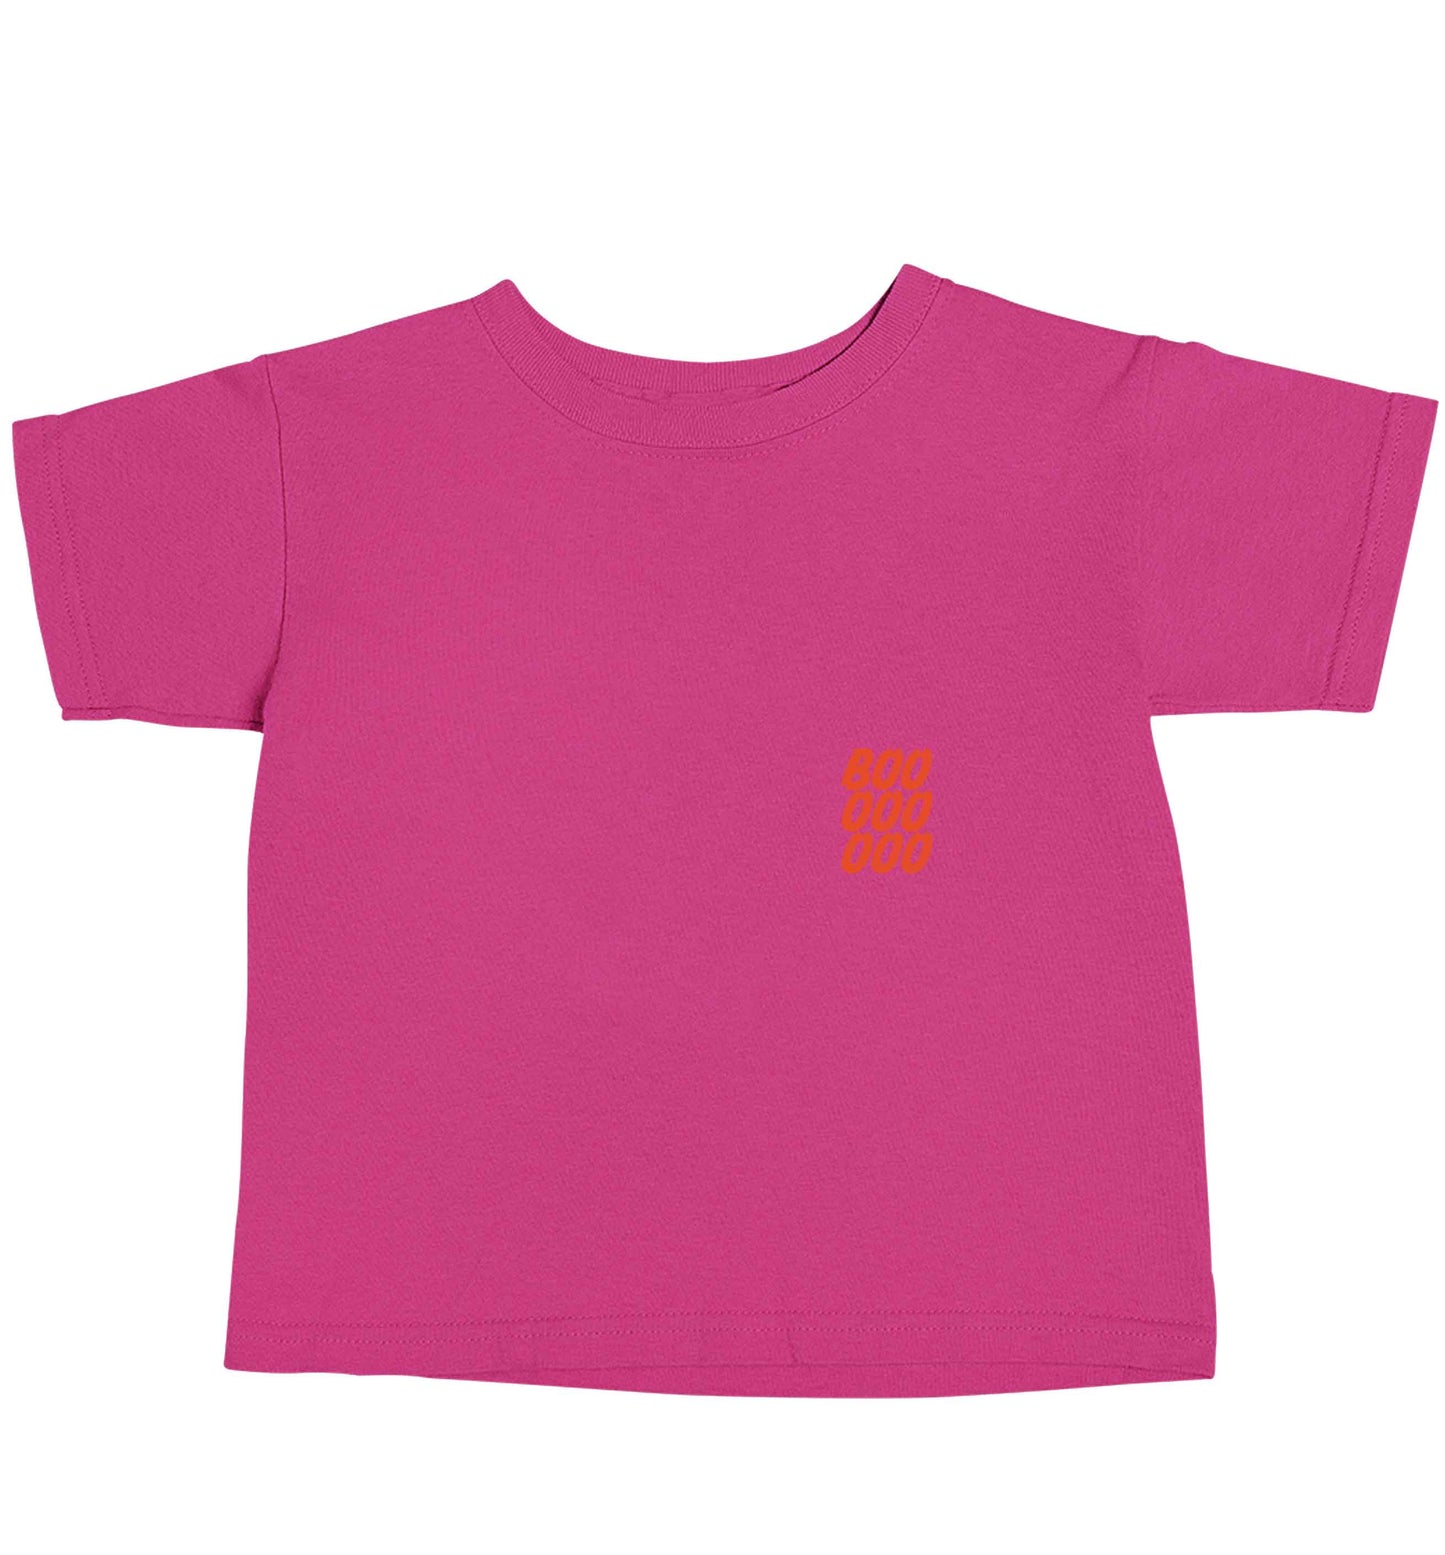 Boo pocket pink baby toddler Tshirt 2 Years